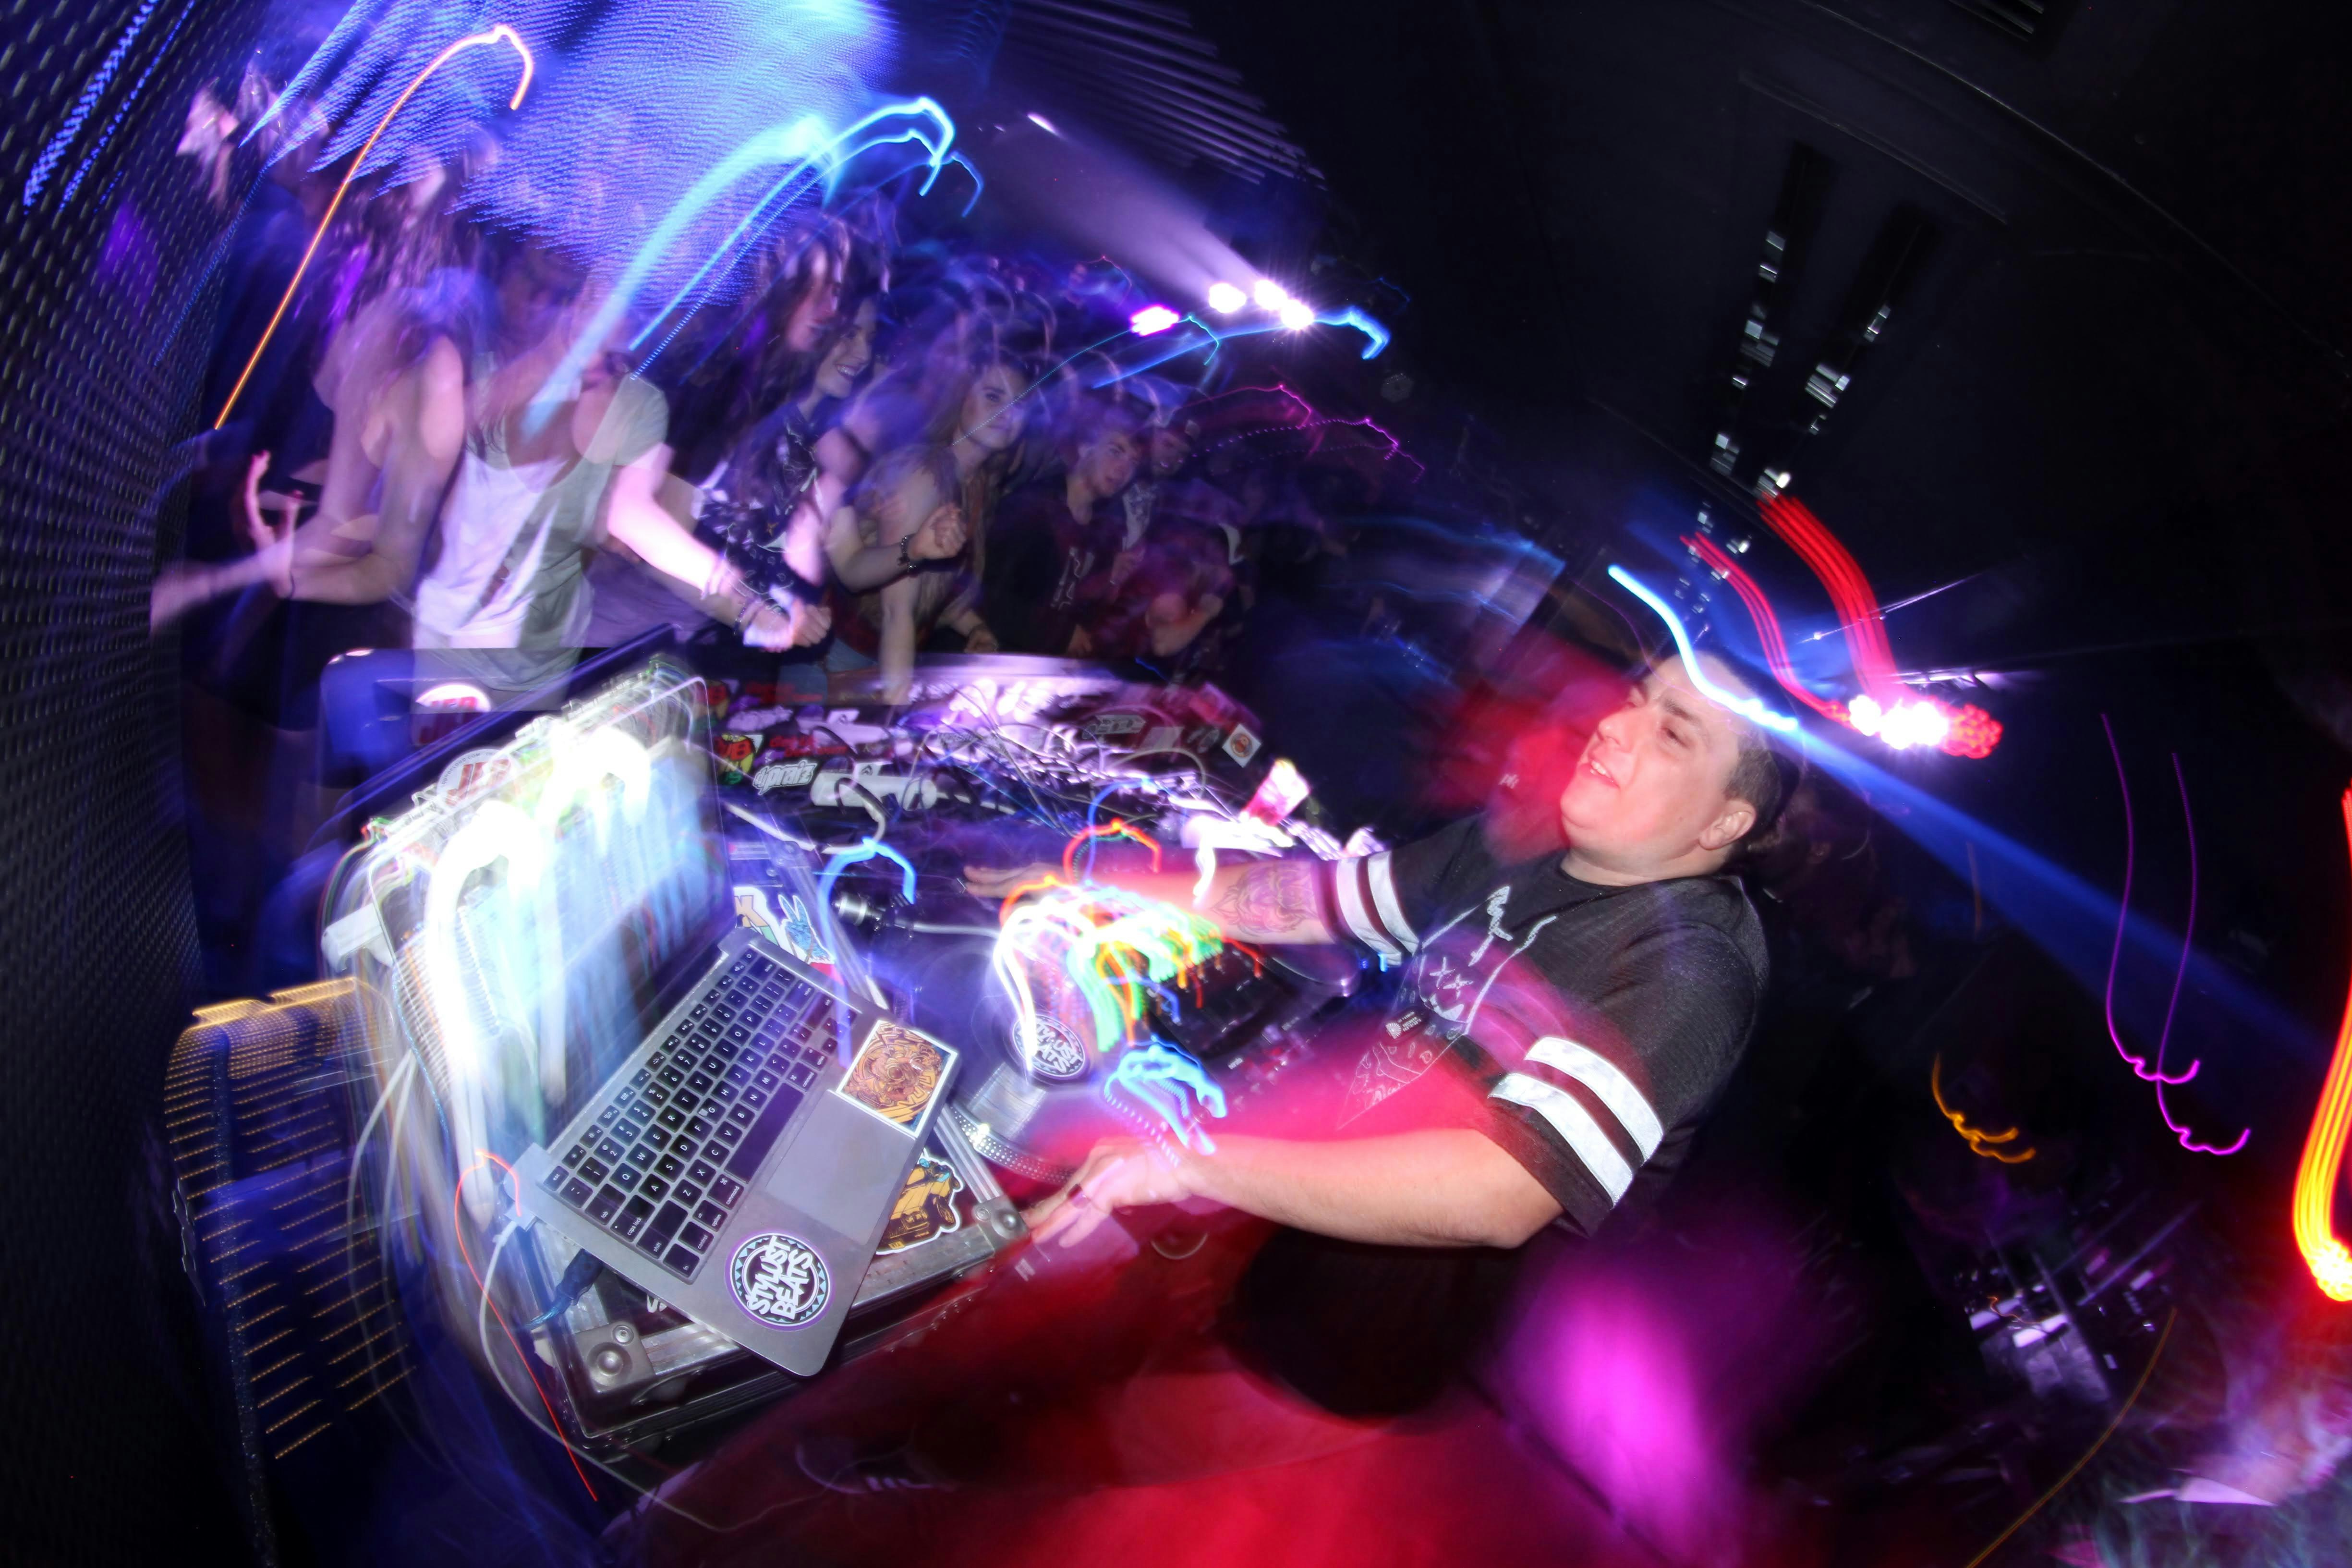 DJ stylust beats dropping the heavy bass music!